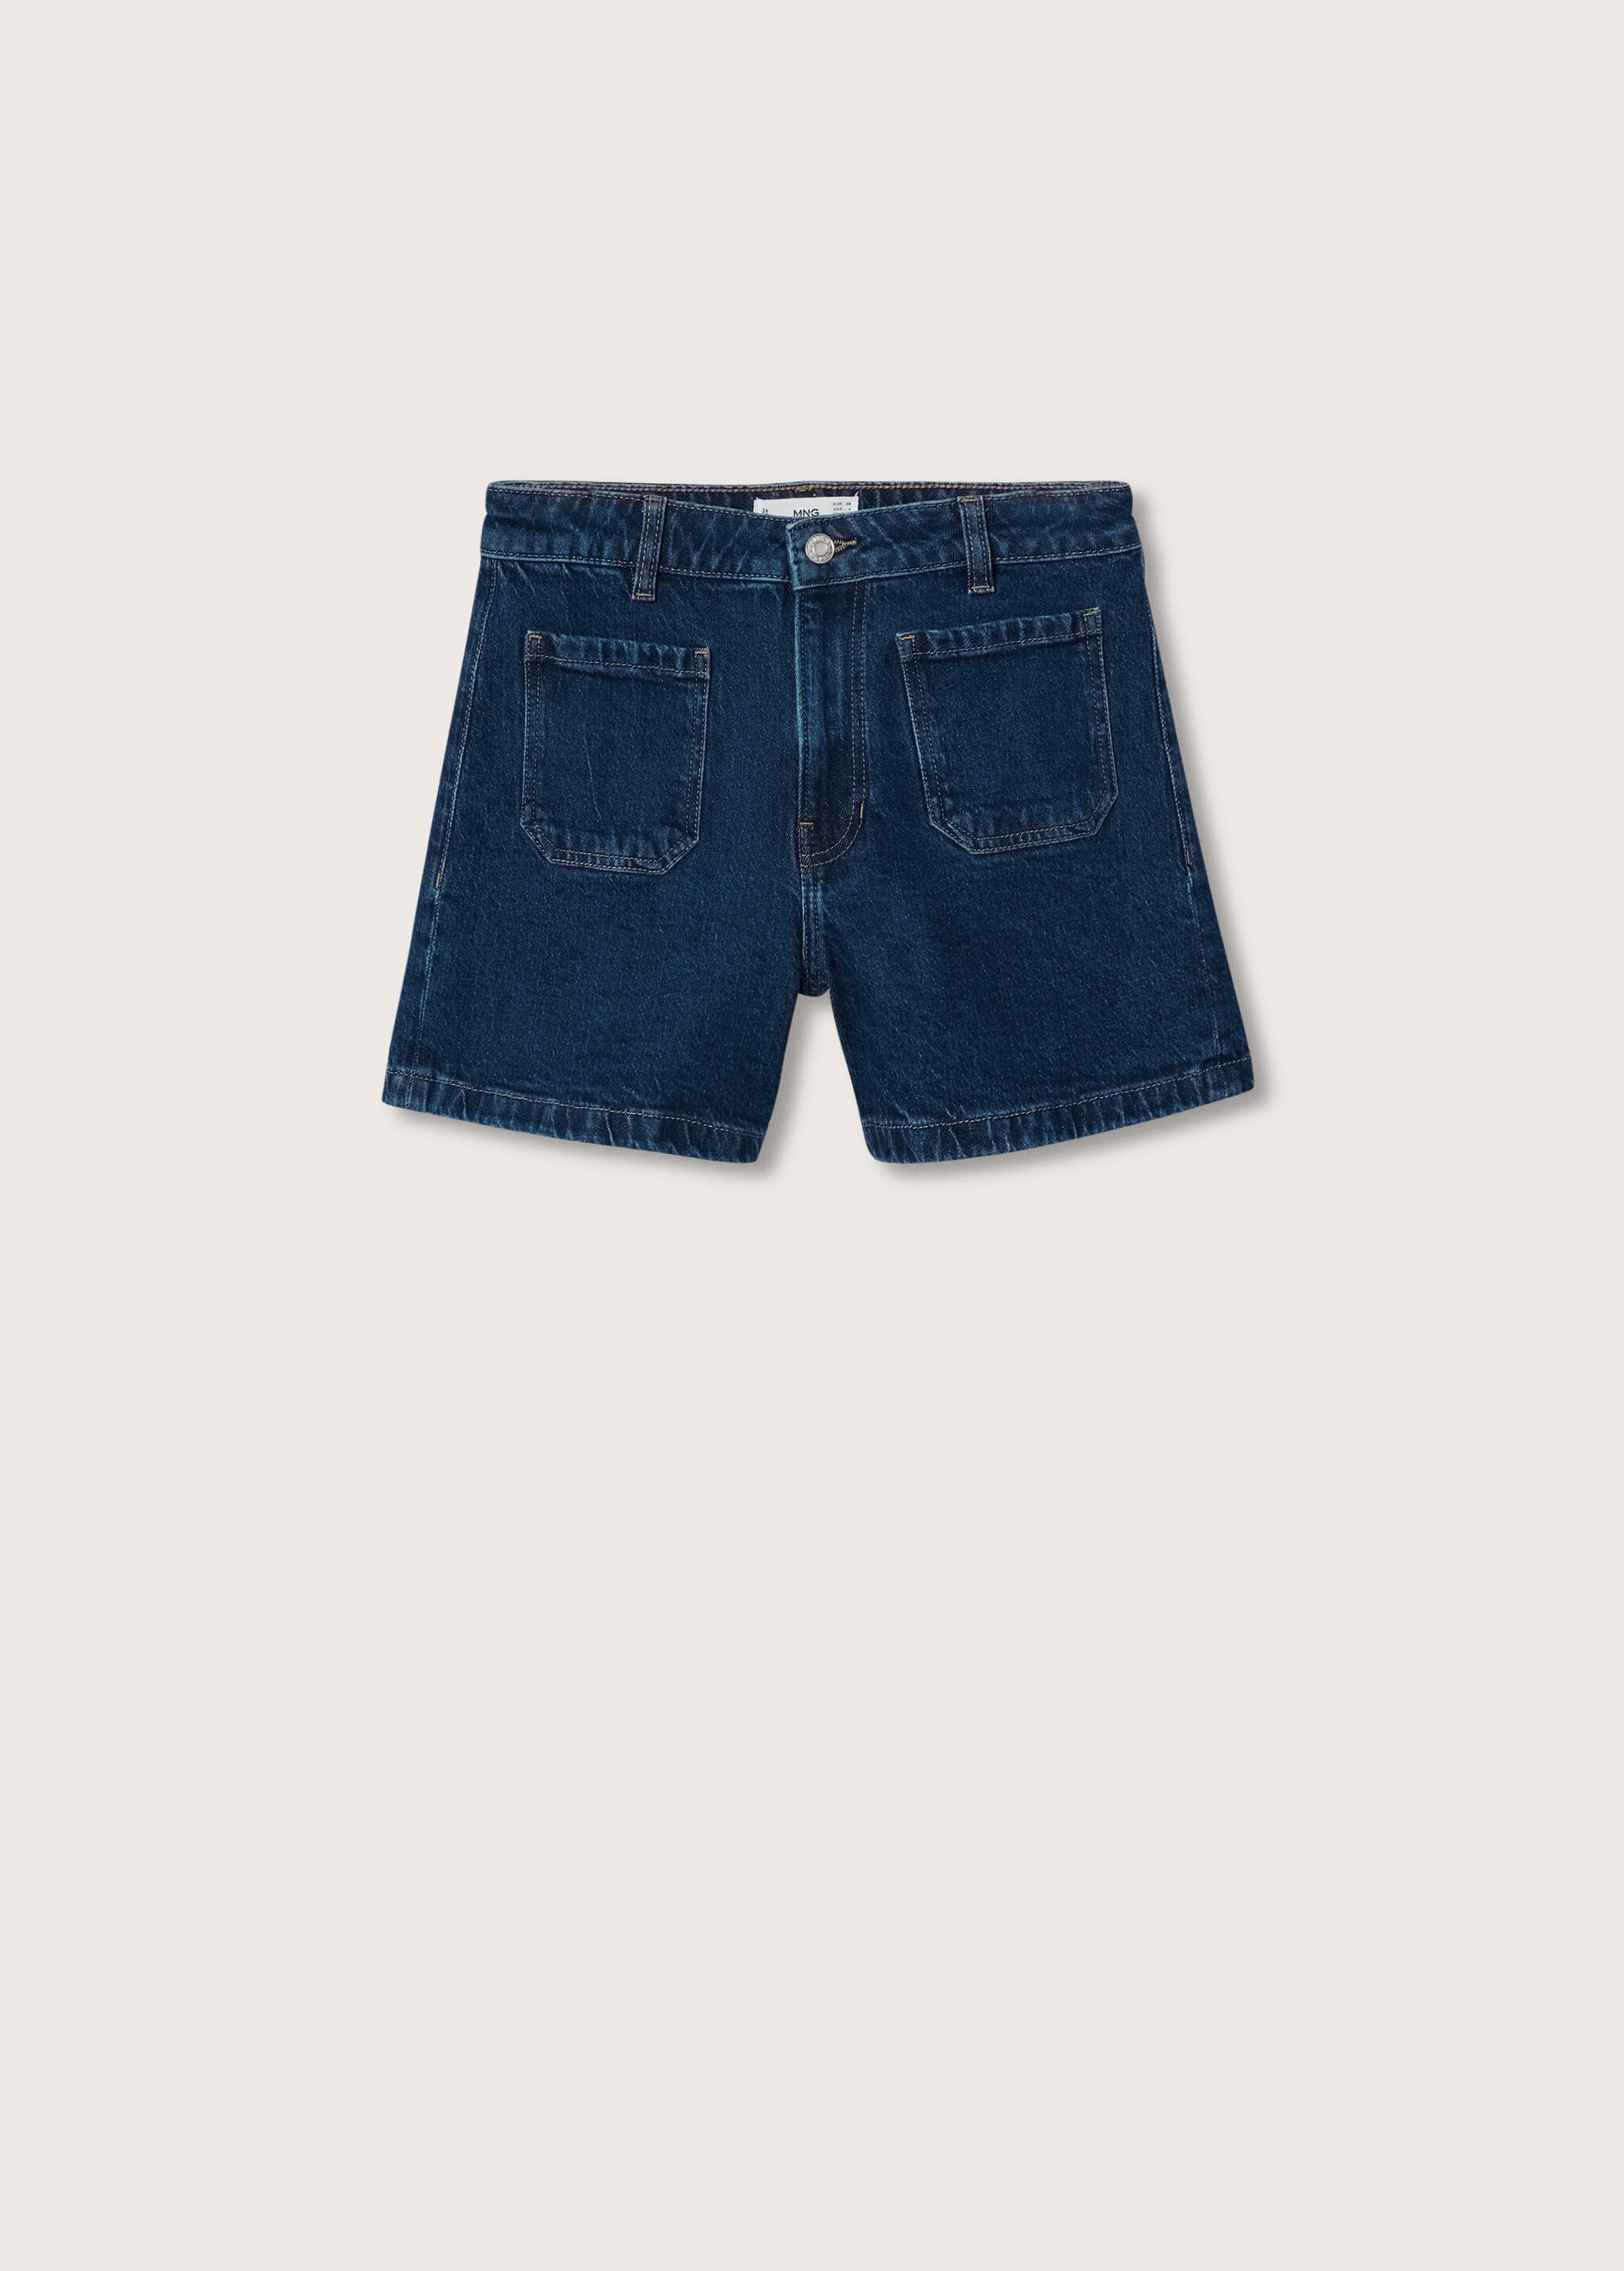 Shorts texans slim - Article sense model